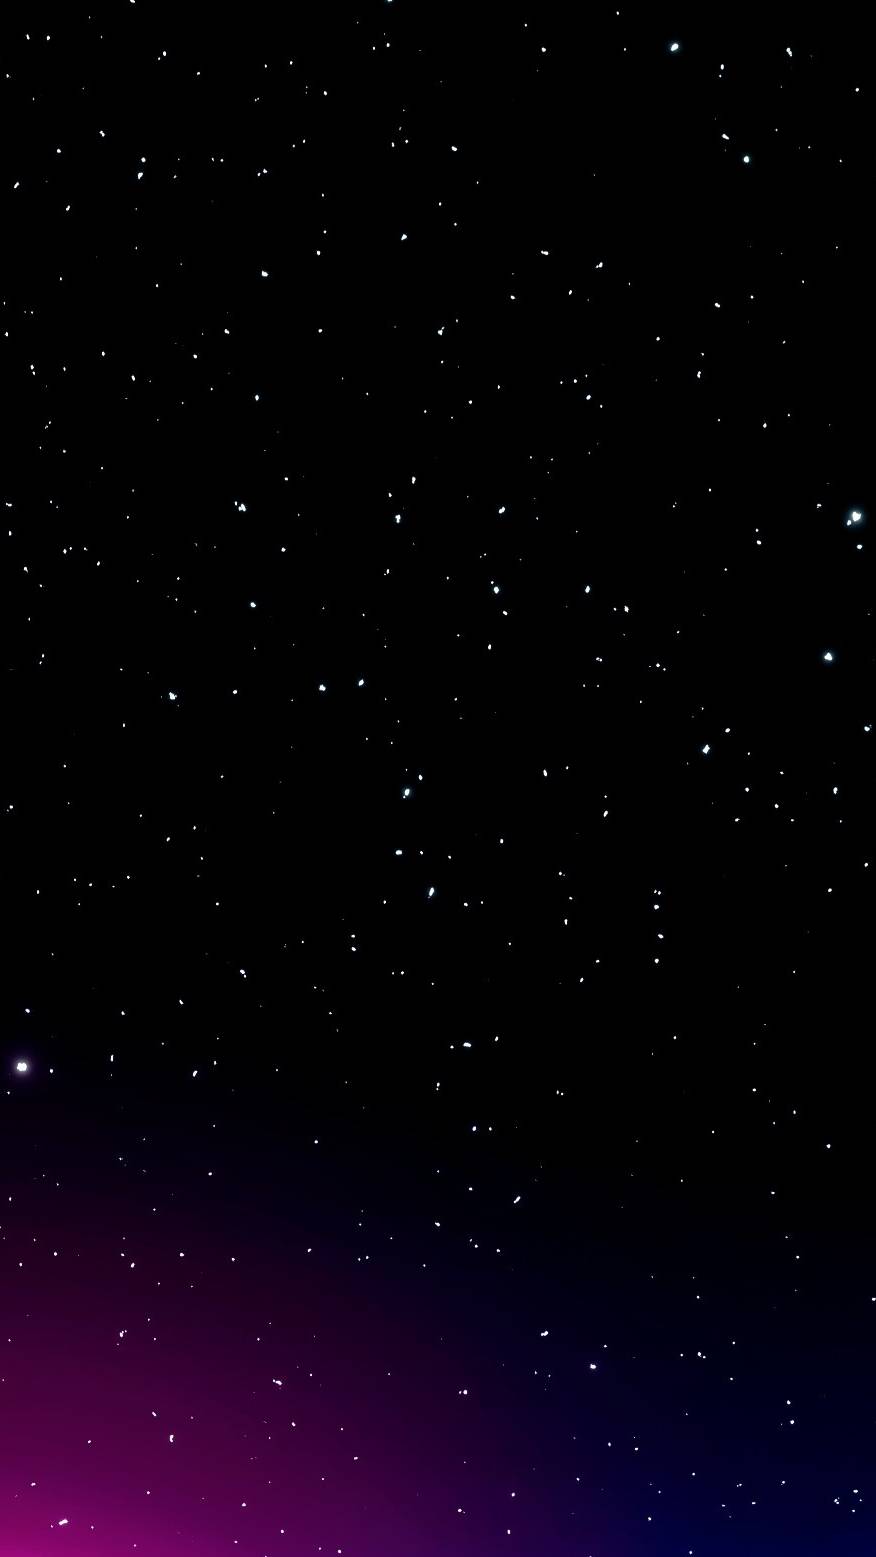 Deep Dark Space Stars IPhone Wallpaper Wallpaper, iPhone Wallpaper